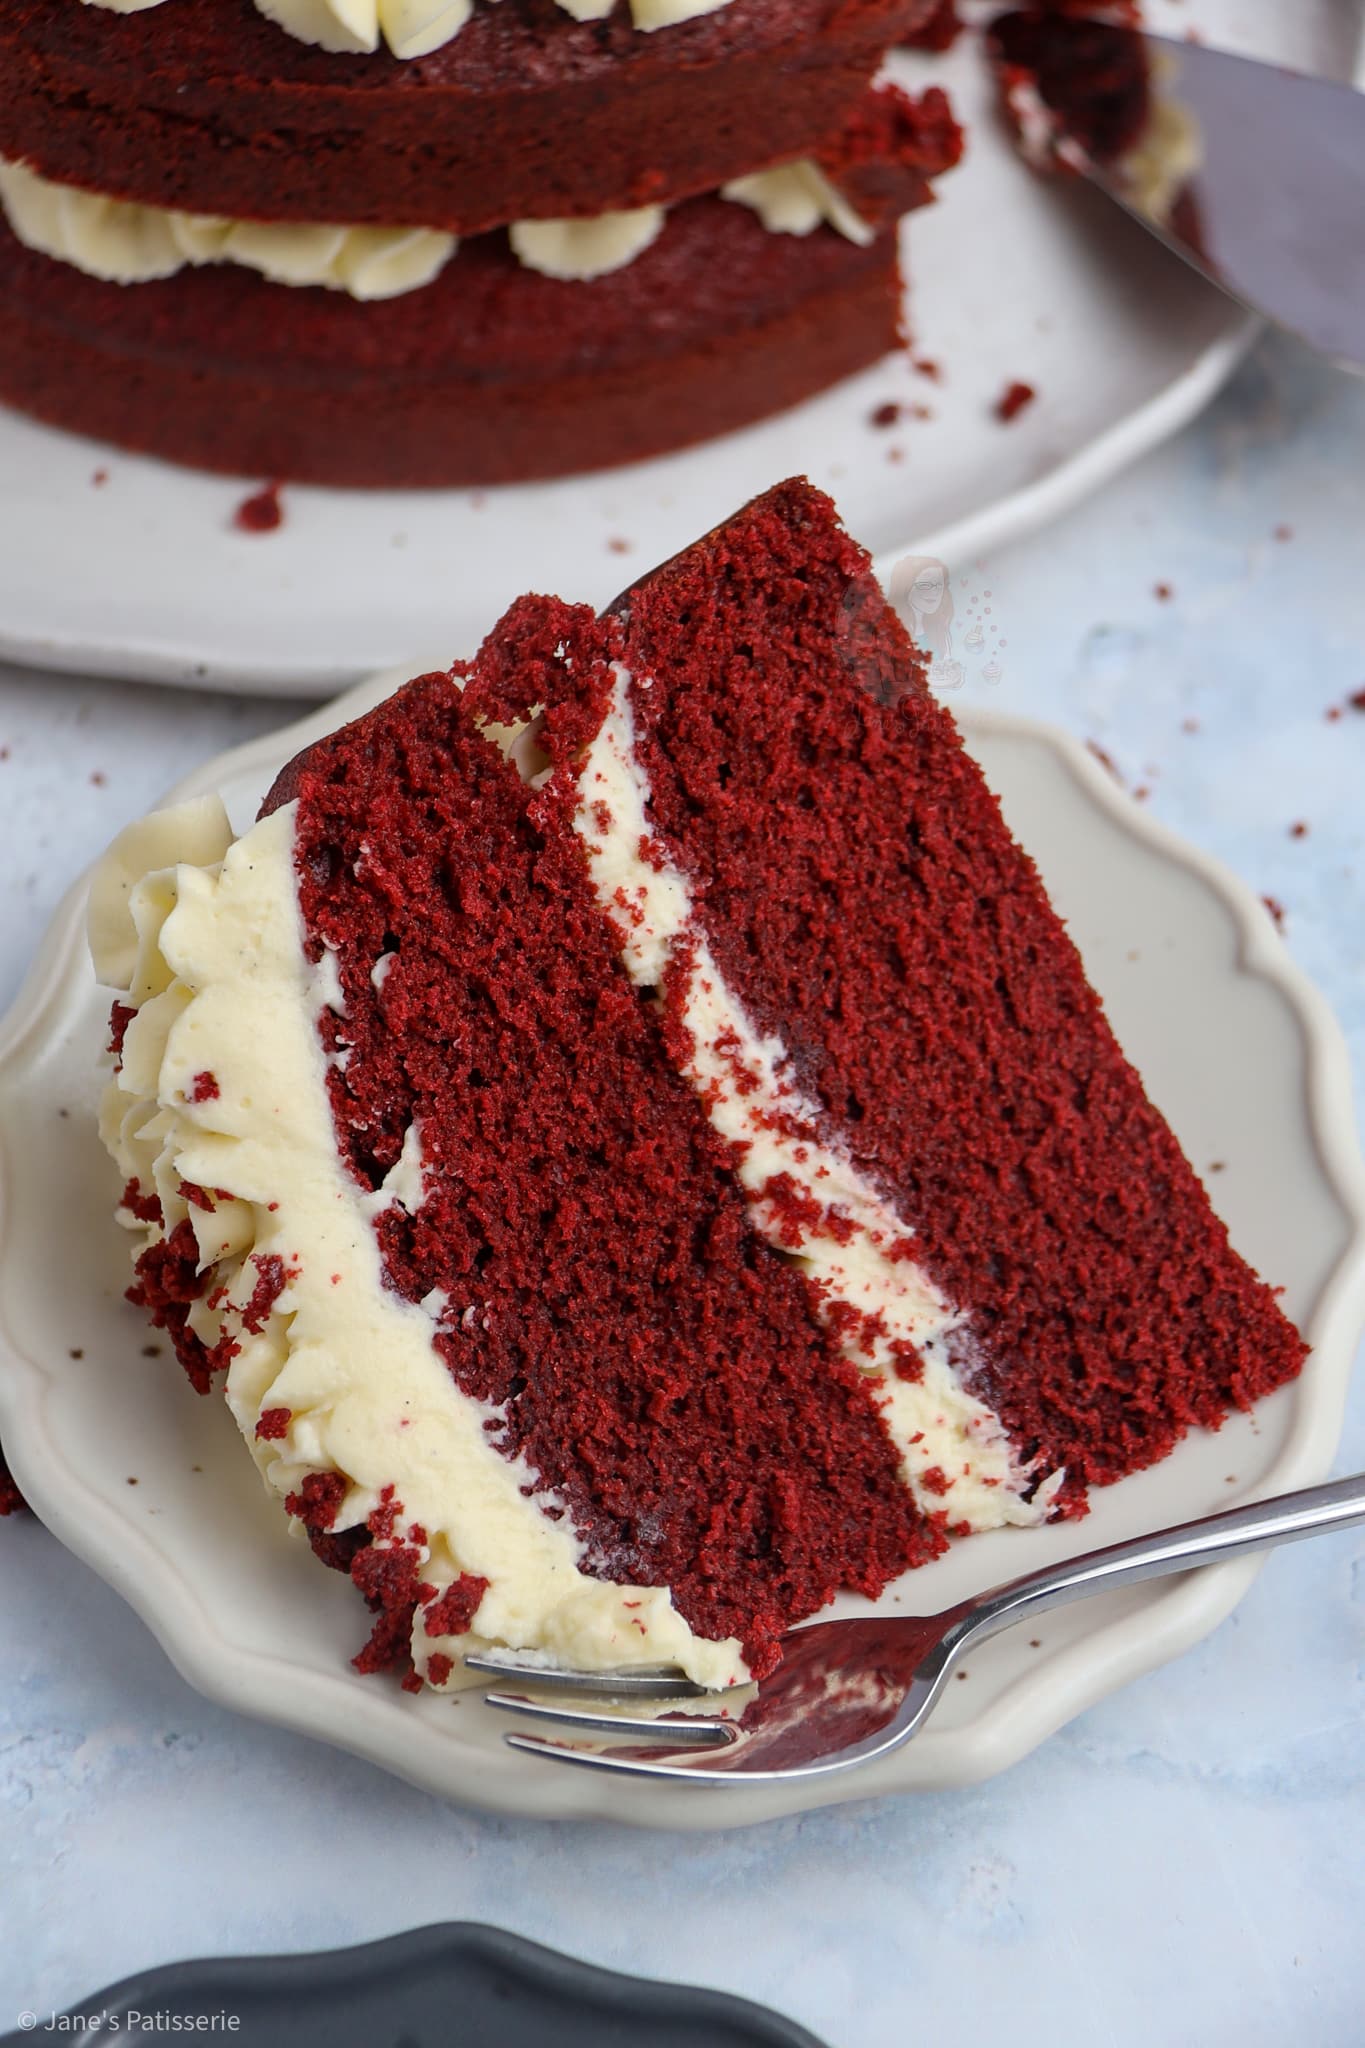 Three-tier red velvet cake recipe - BBC Food